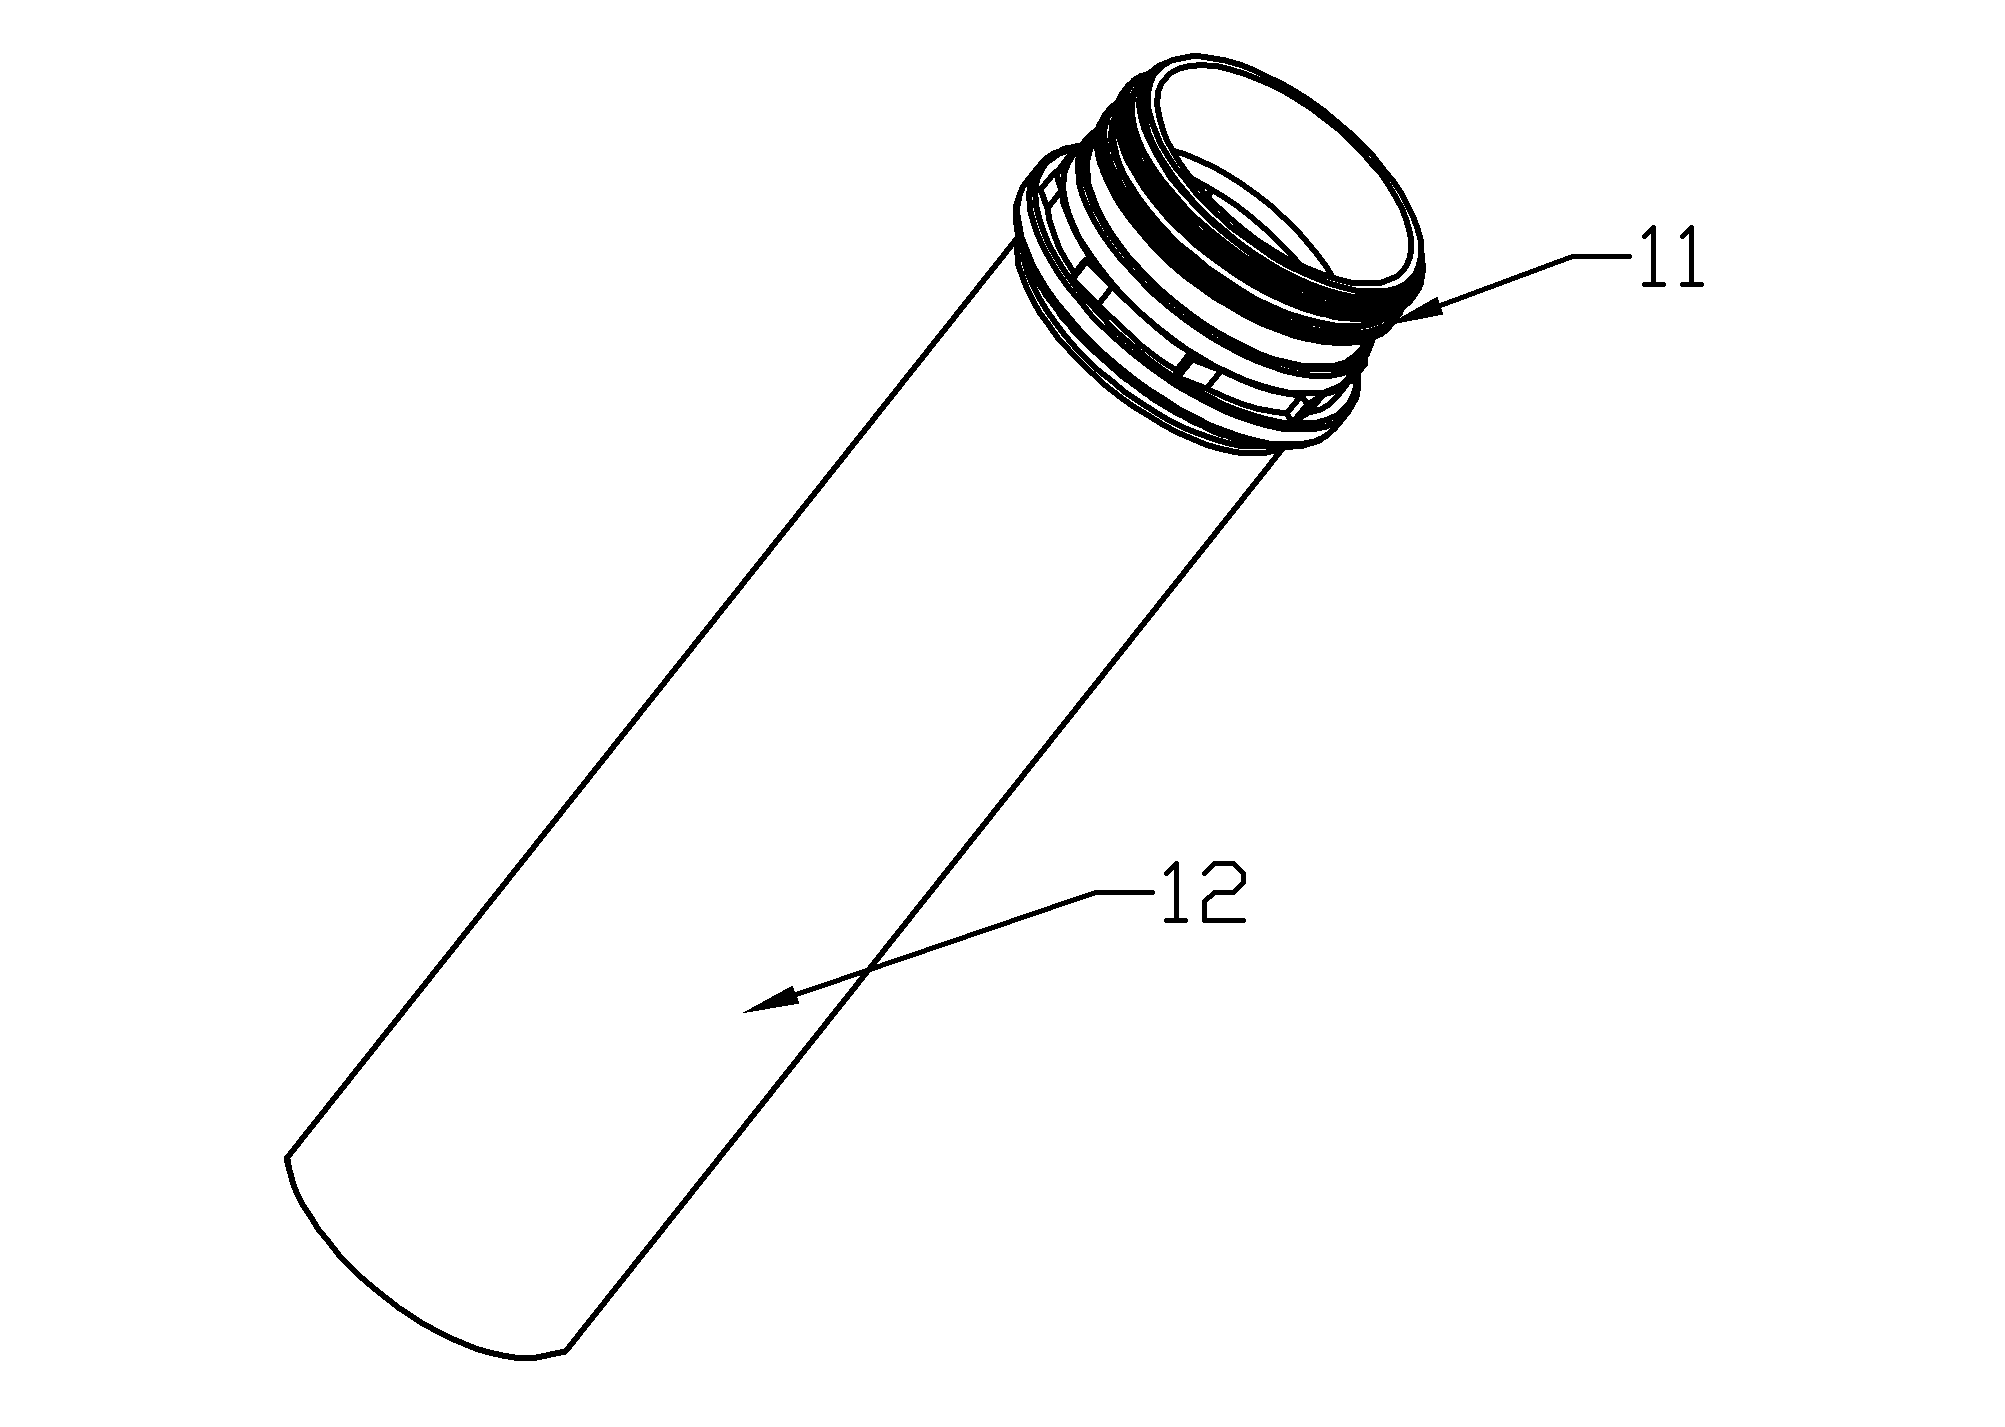 Method for manufacturing plastic bottle